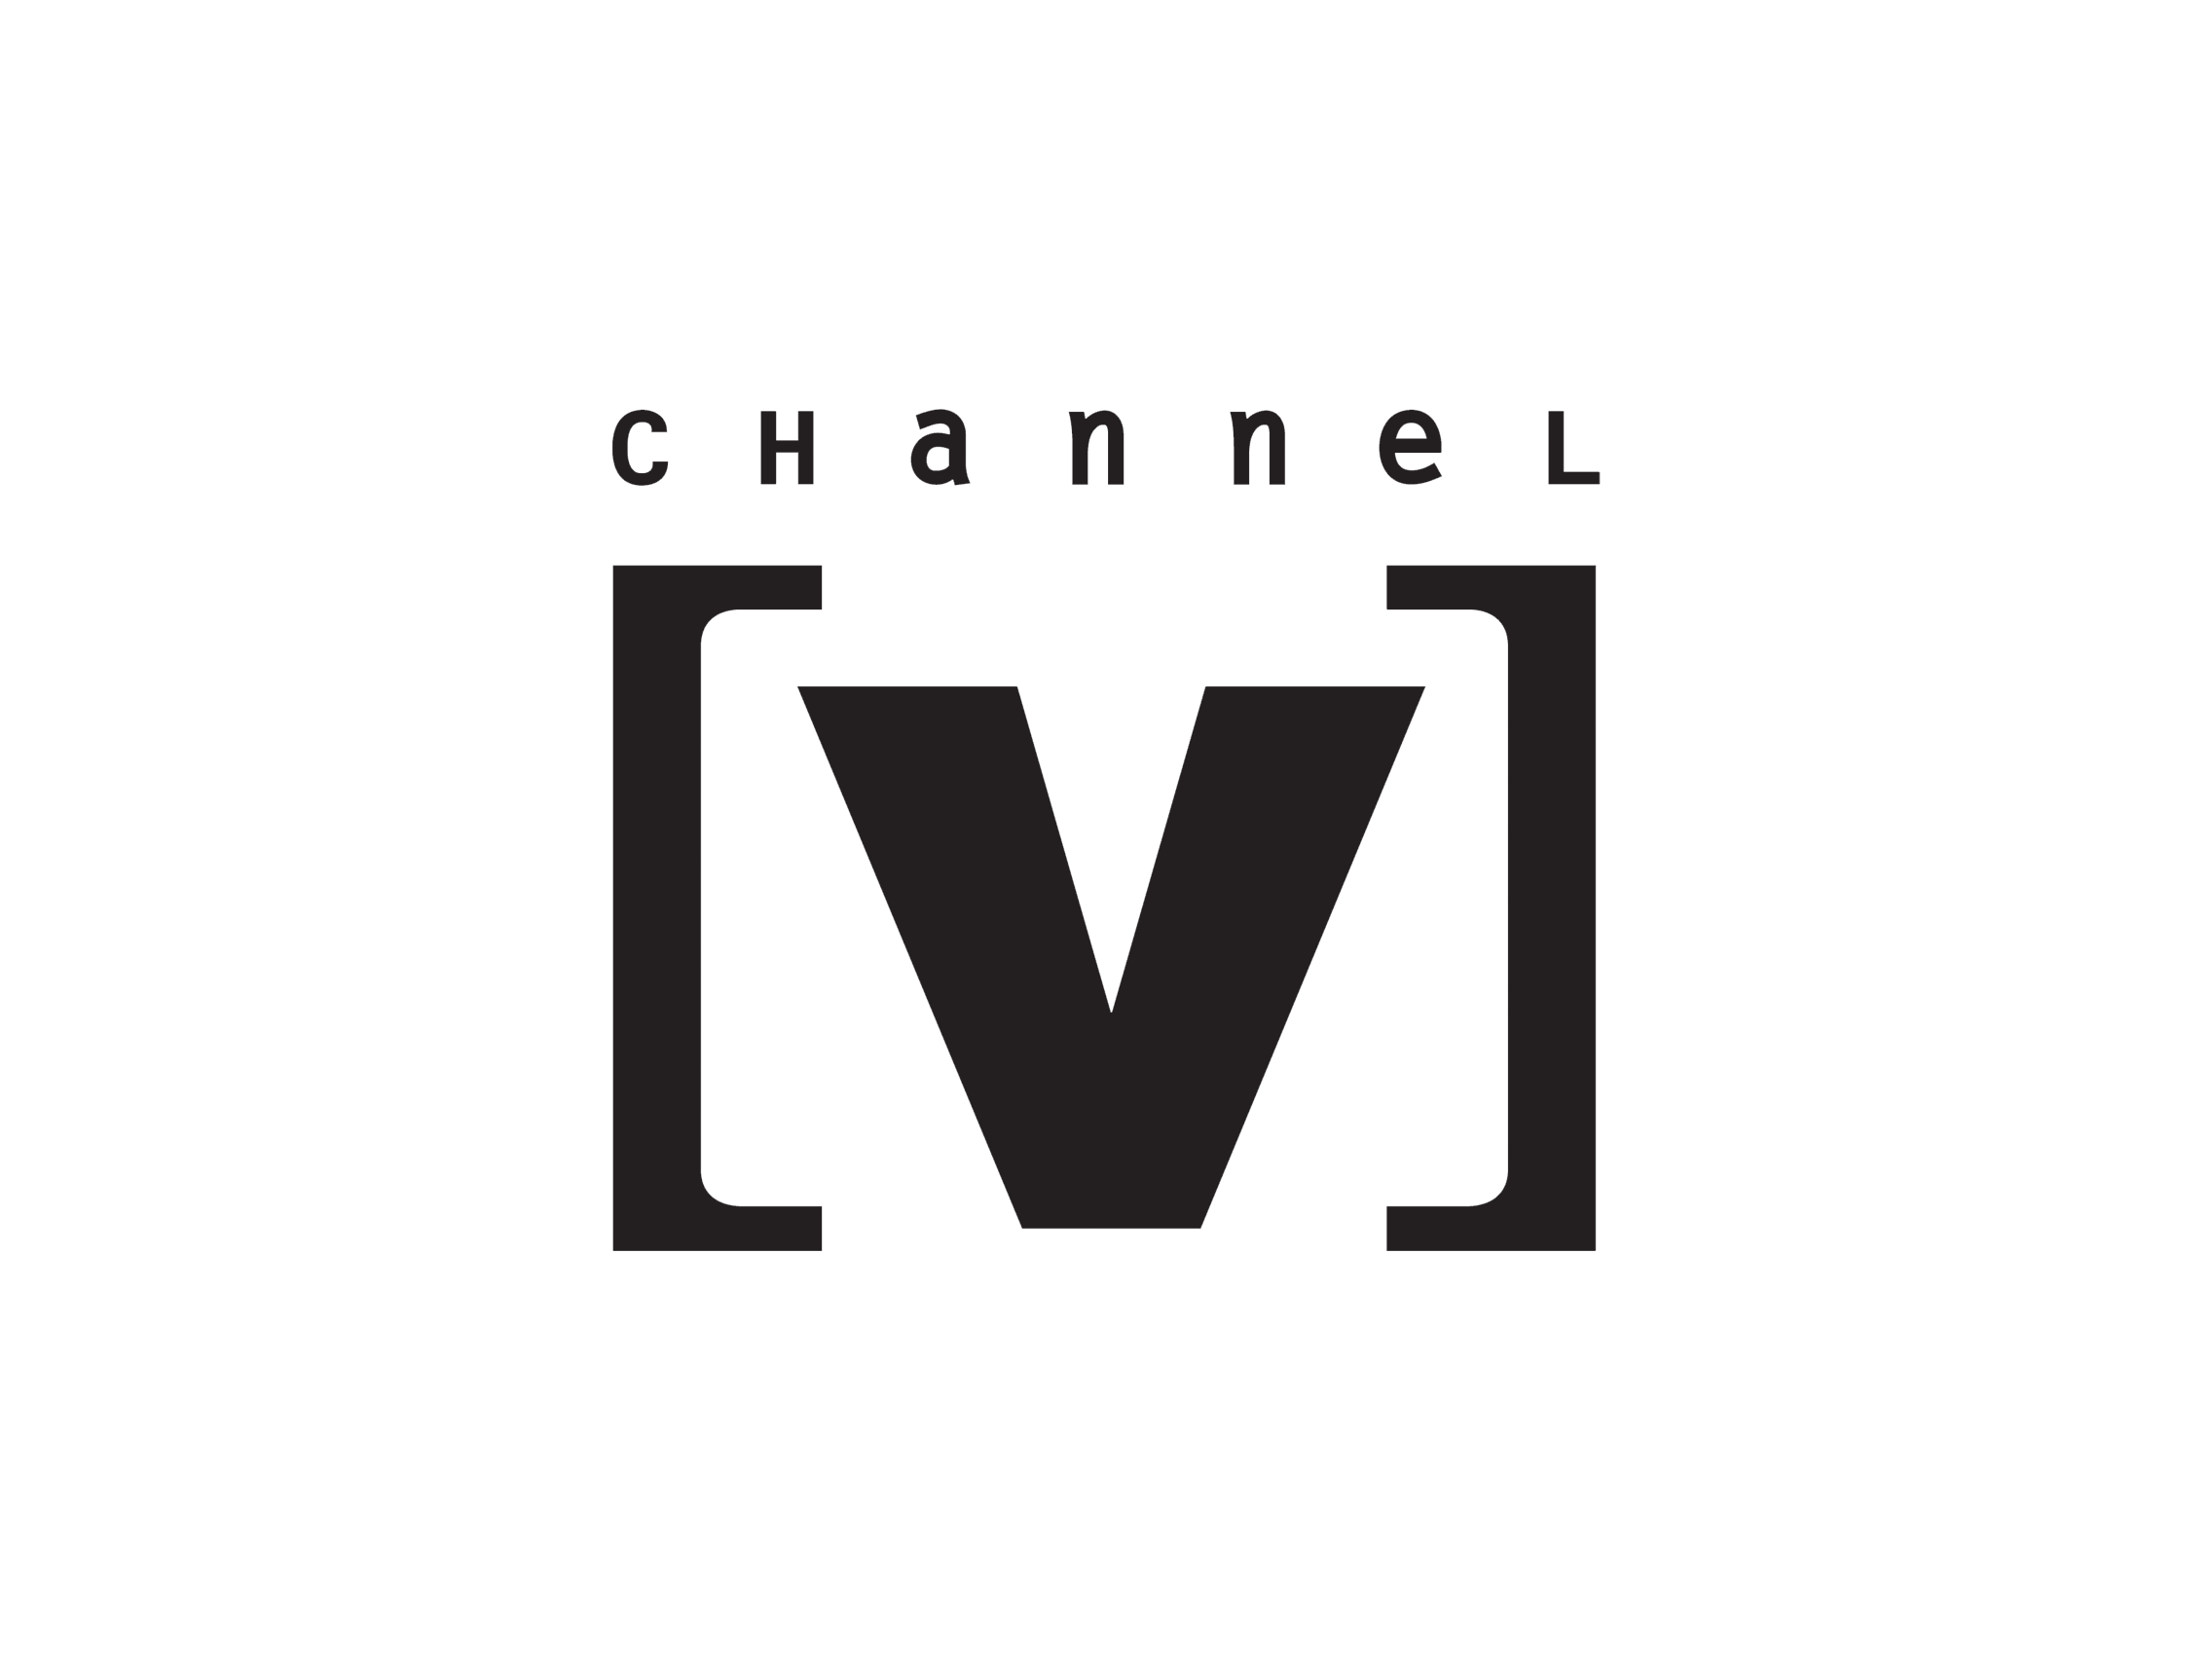 Google Channel Logo - Discovery Channel logo